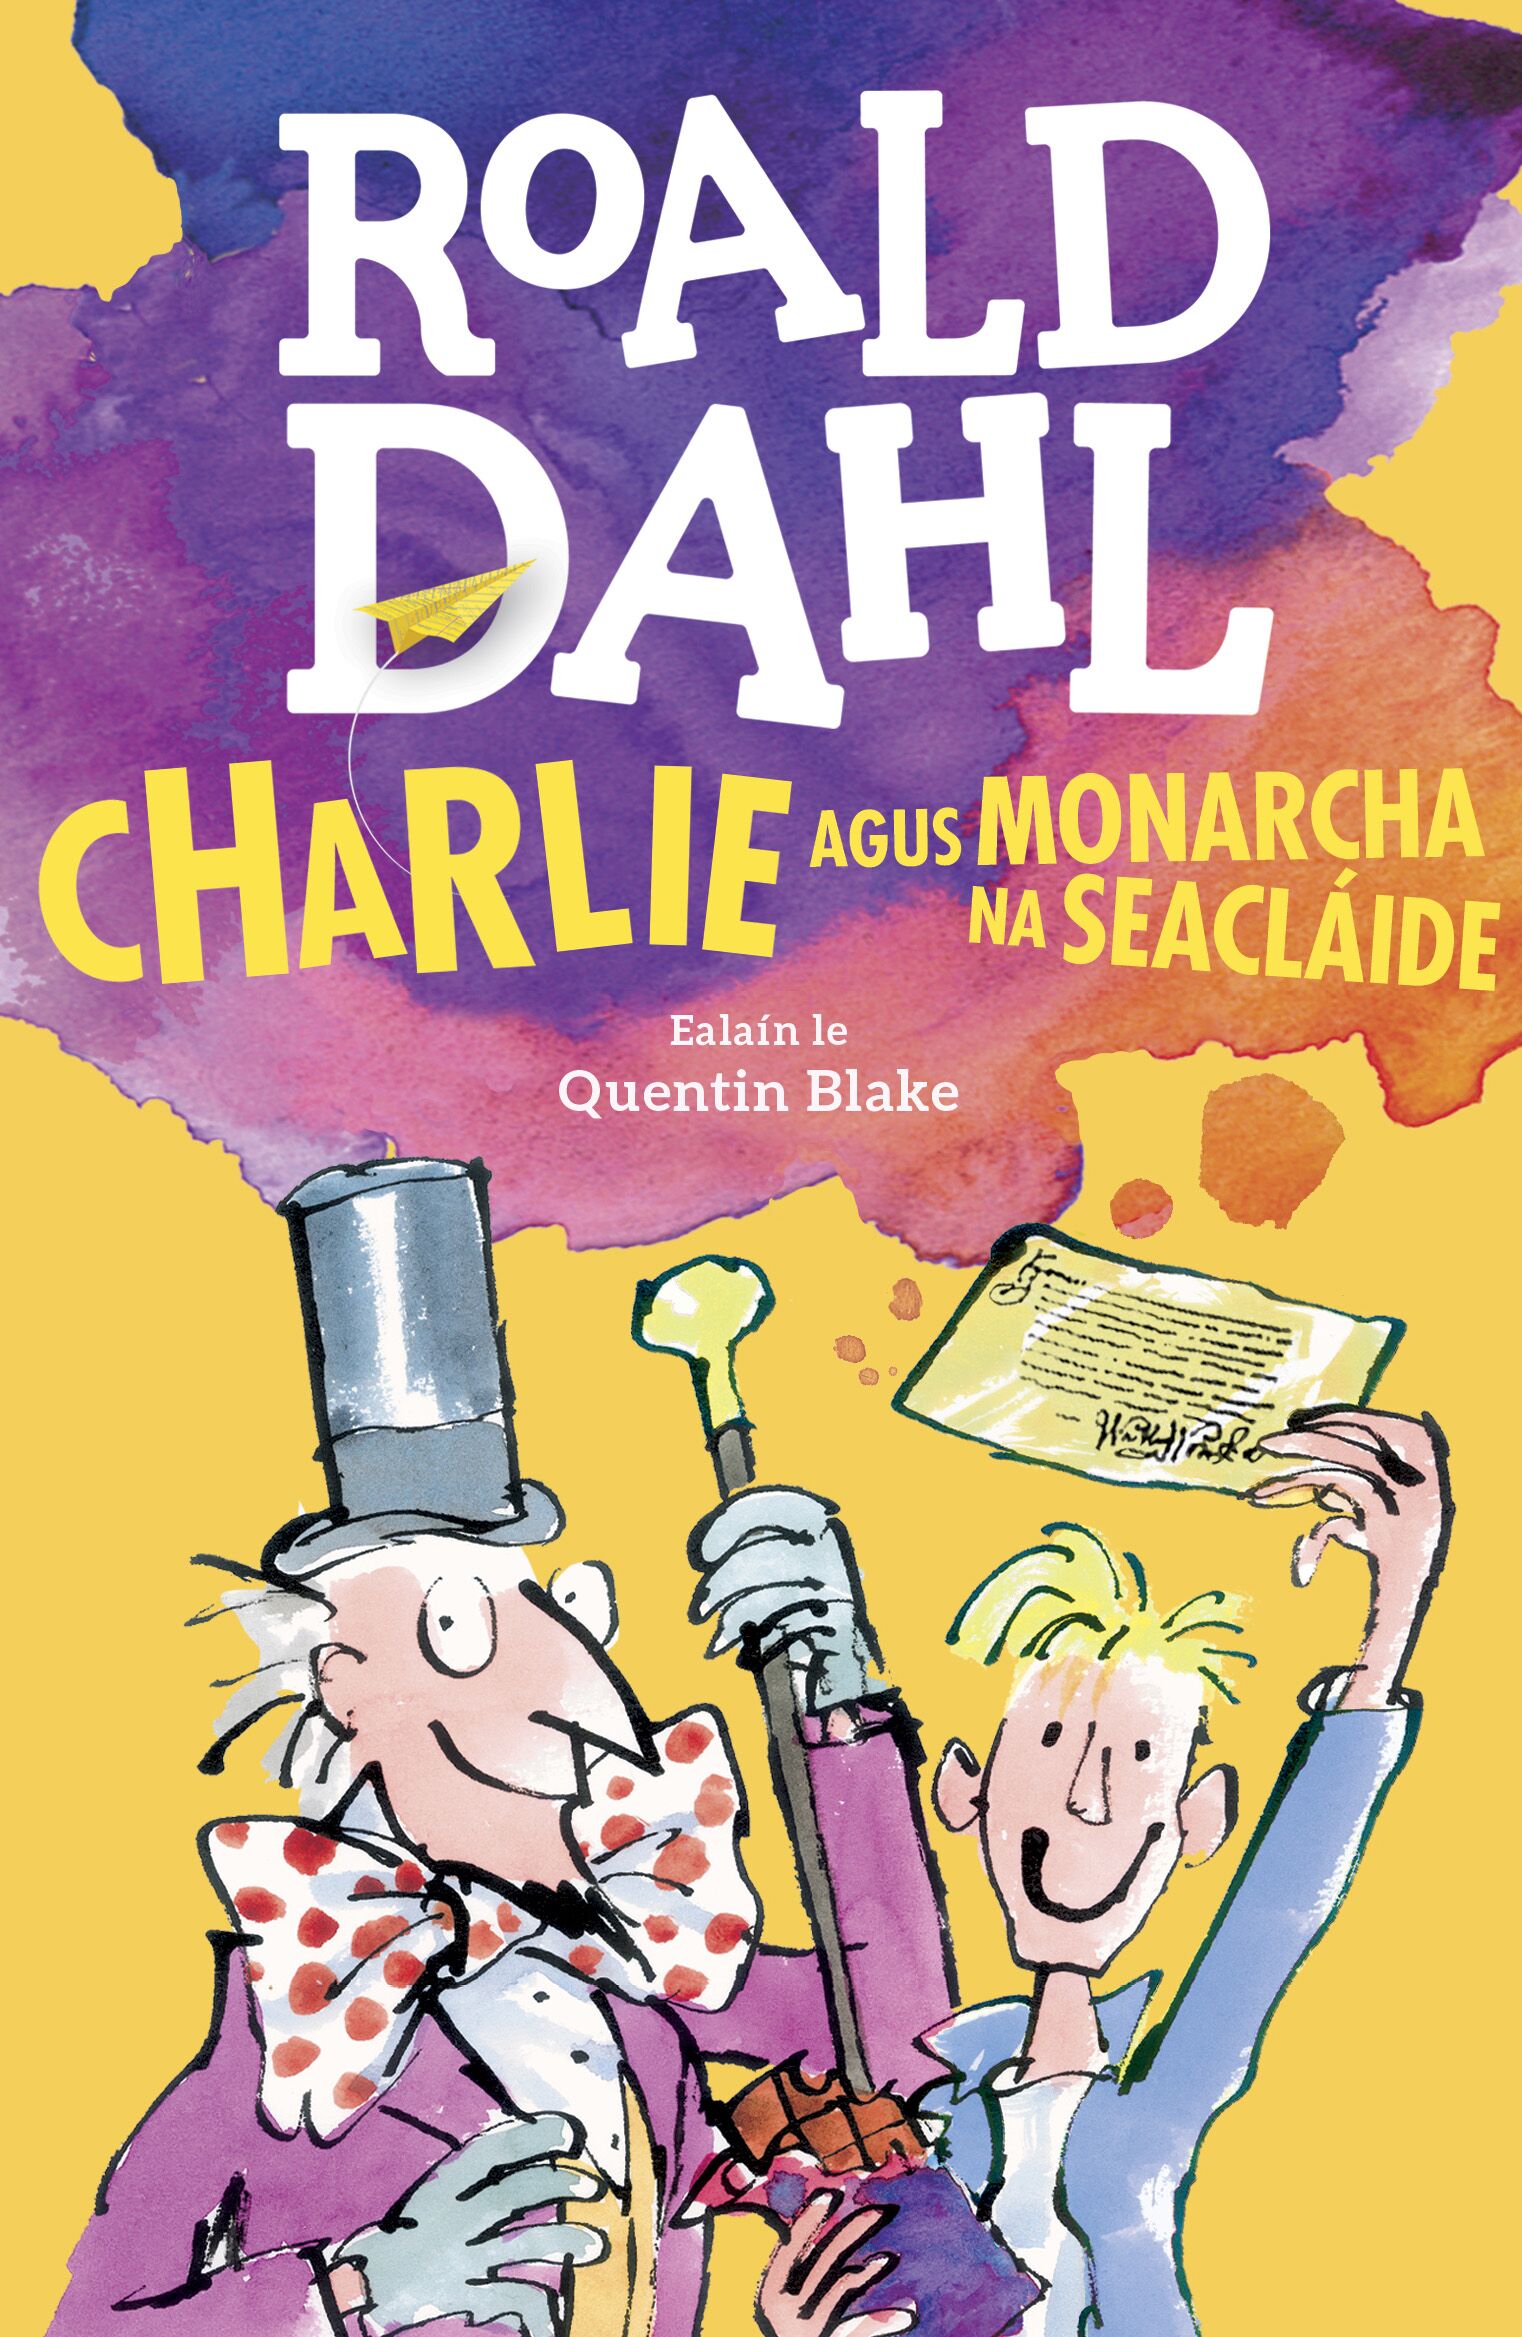 Charlie agus Monarcha na Seacláide, Charlie and the Chocolate Factory